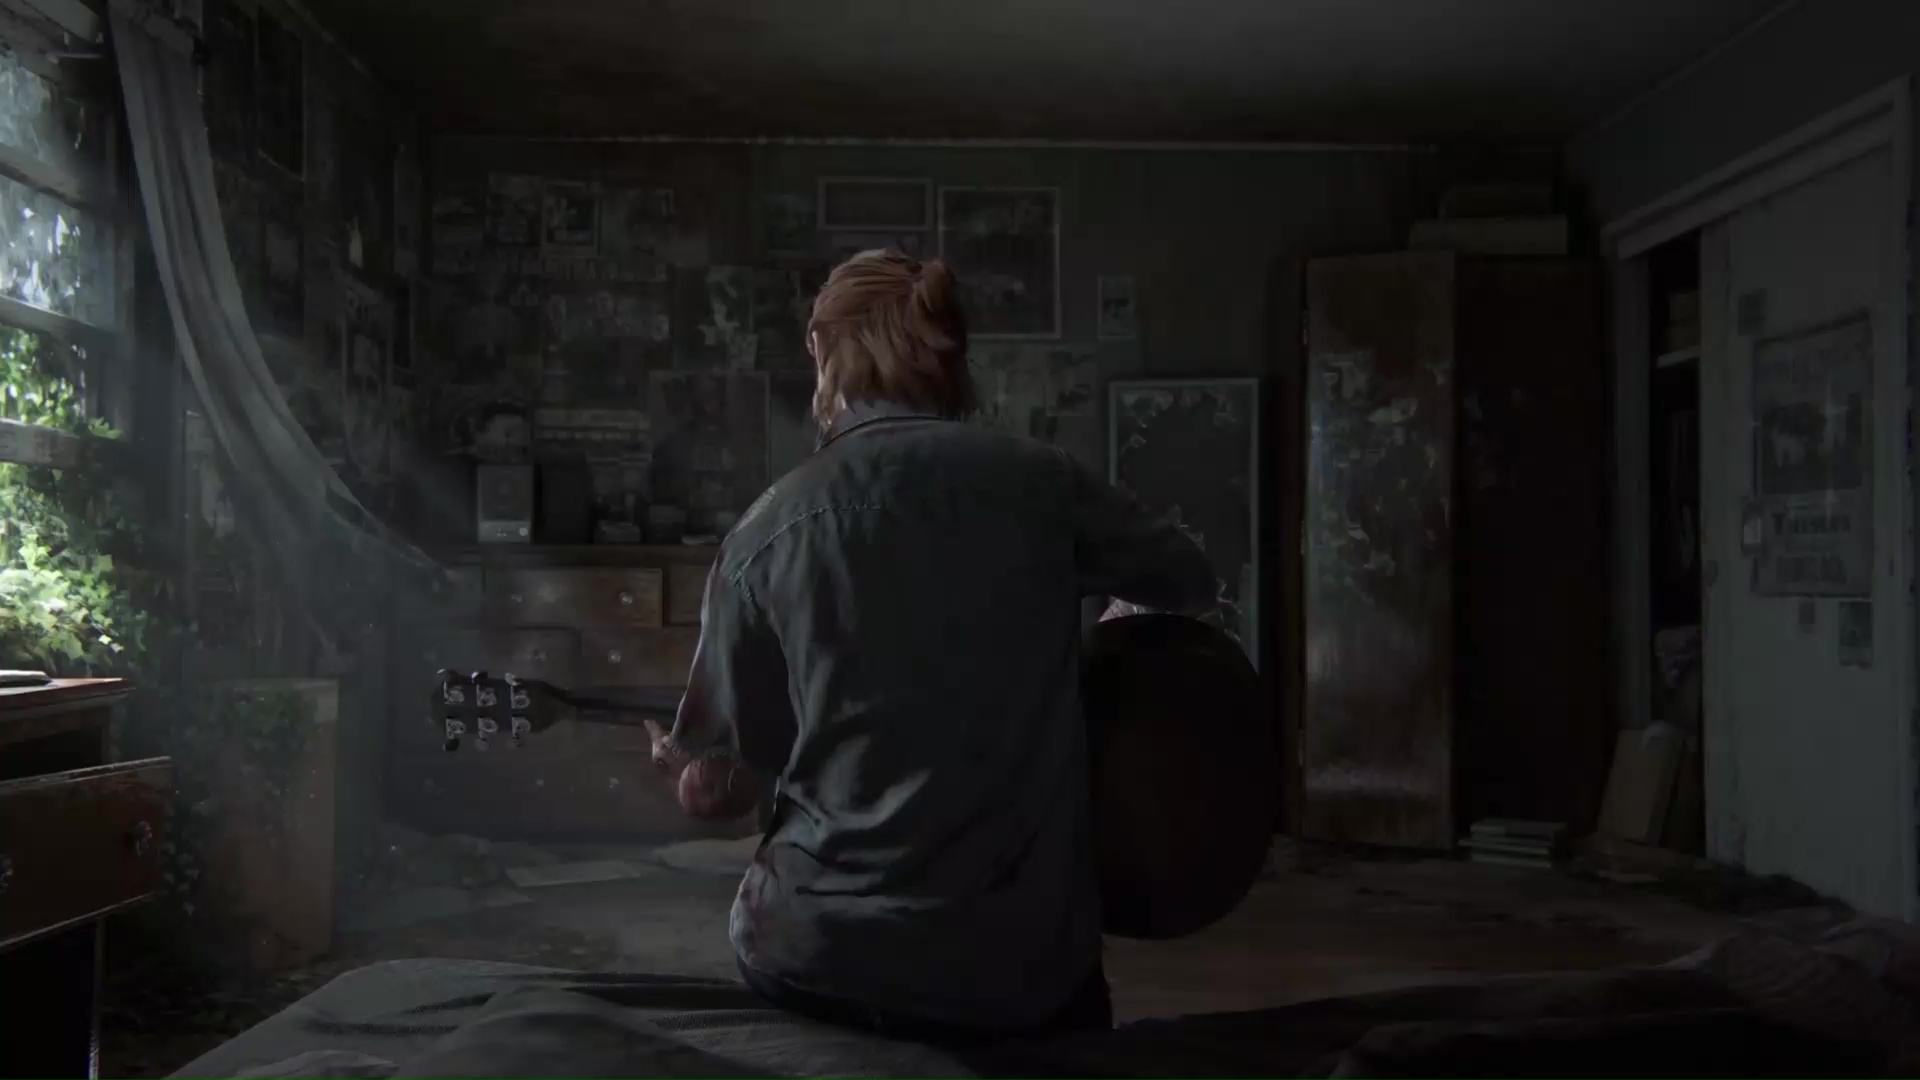 The Last Of Us Part 2 Live Wallpaper - WallpaperWaifu